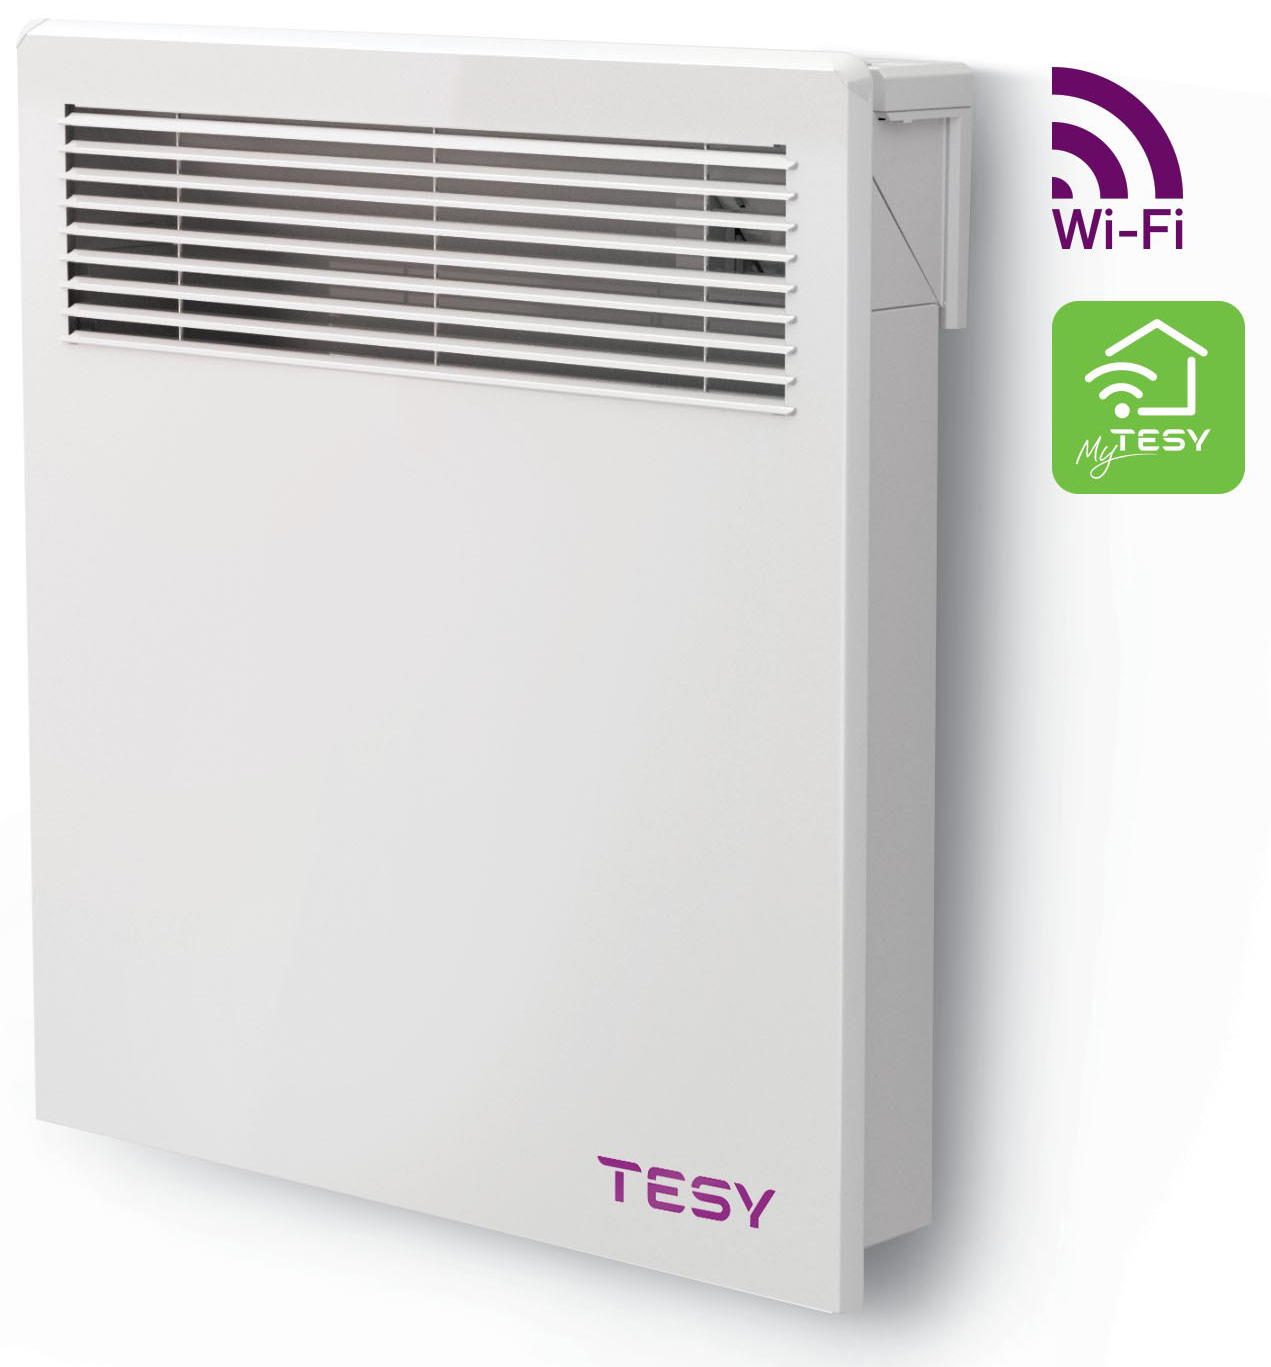 Характеристики электроконвектор tesy мощностью 500 вт Tesy CN 051 050 EI CLOUD W